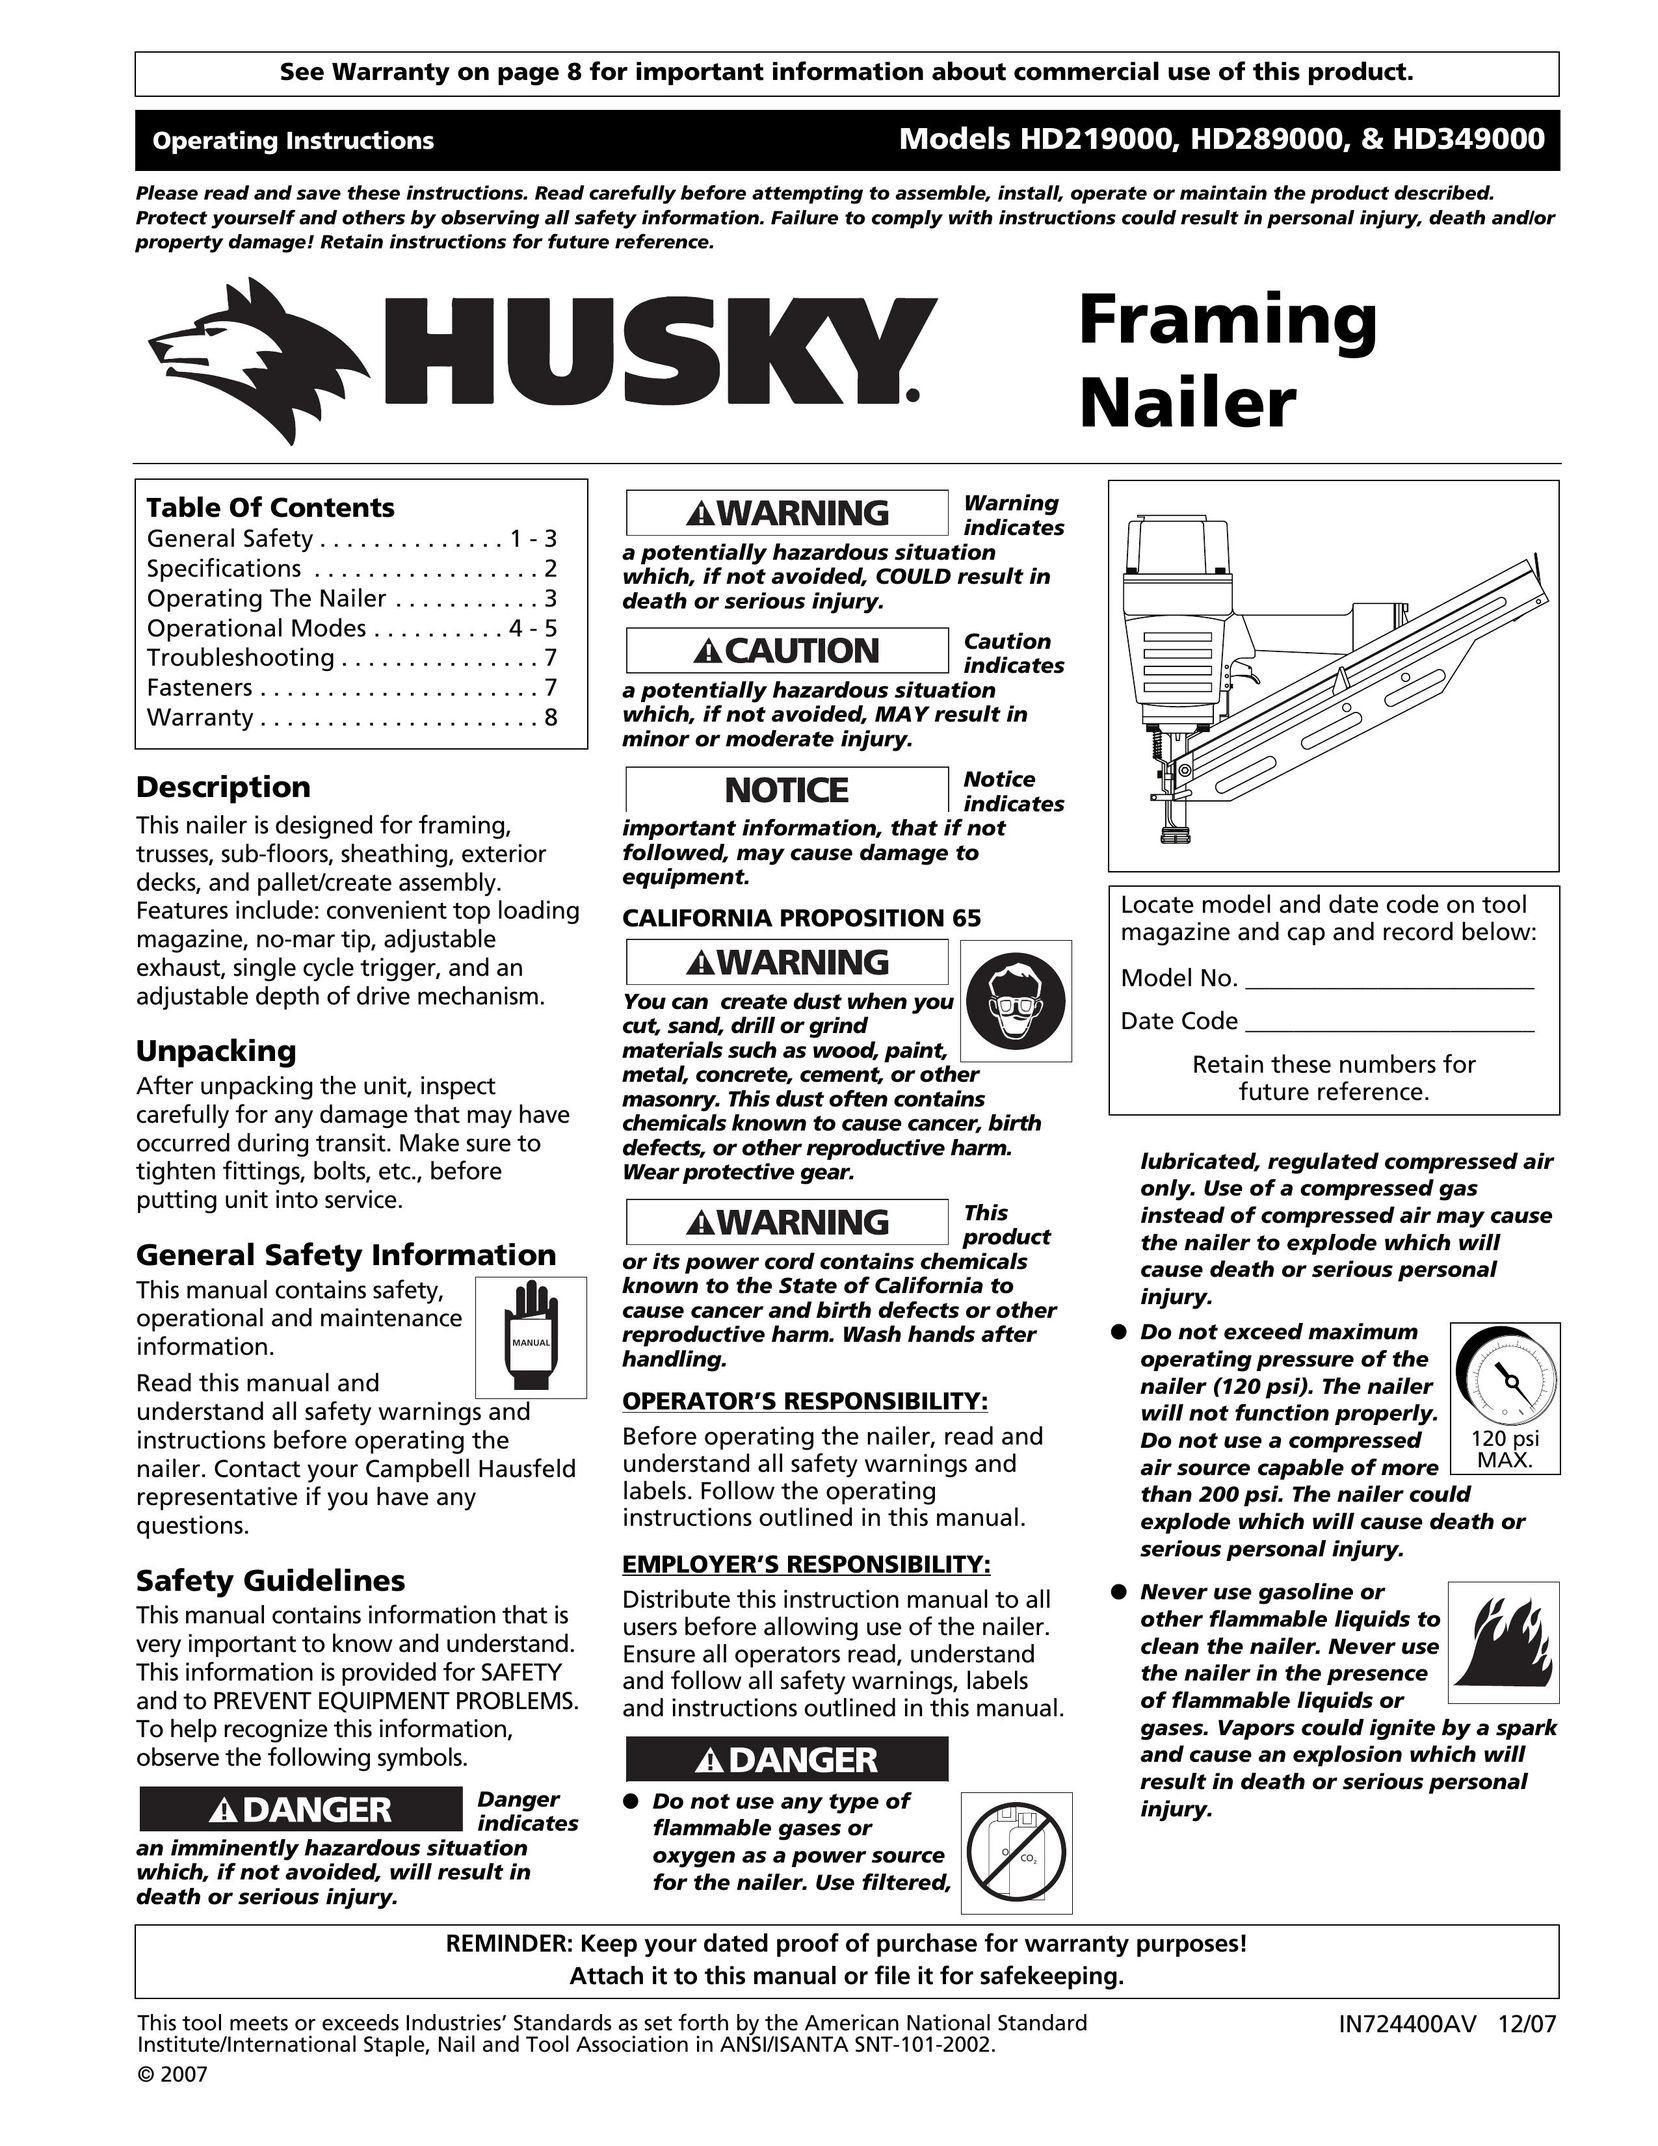 Husky HD289000 Nail Gun User Manual